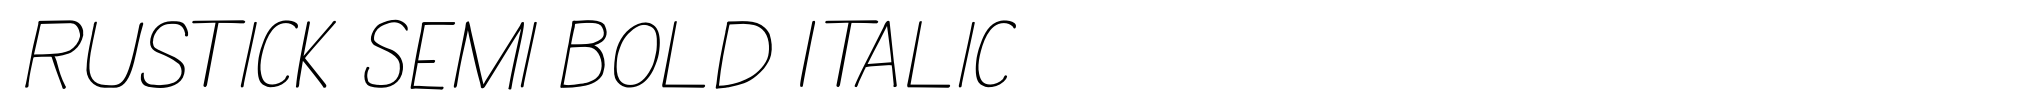 Rustick Semi Bold Italic image